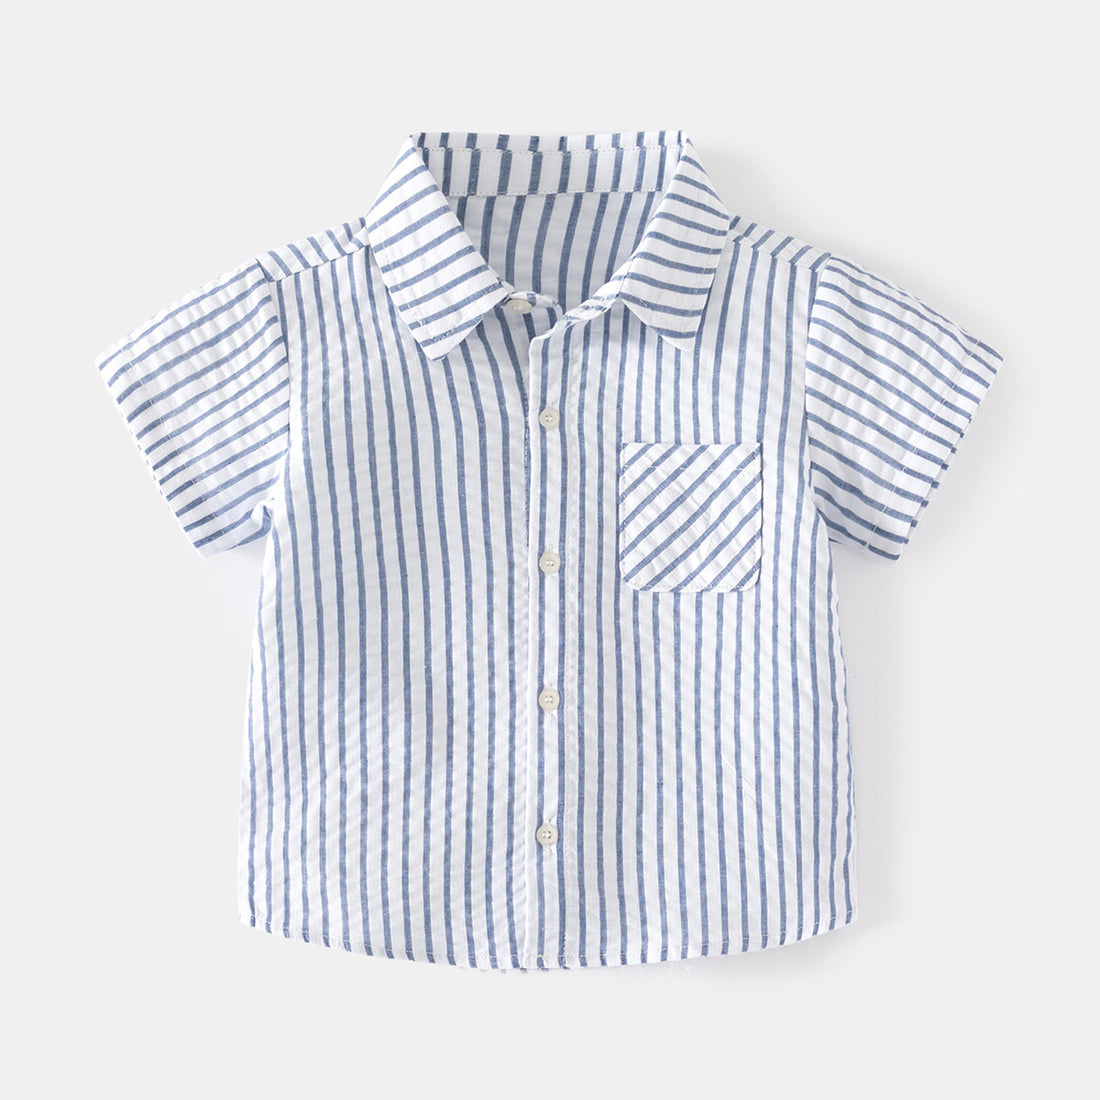 [5131036] - Baju Atasan Kemeja Garis-Garis Fashion Import Anak Laki-laki - Motif Direction Line